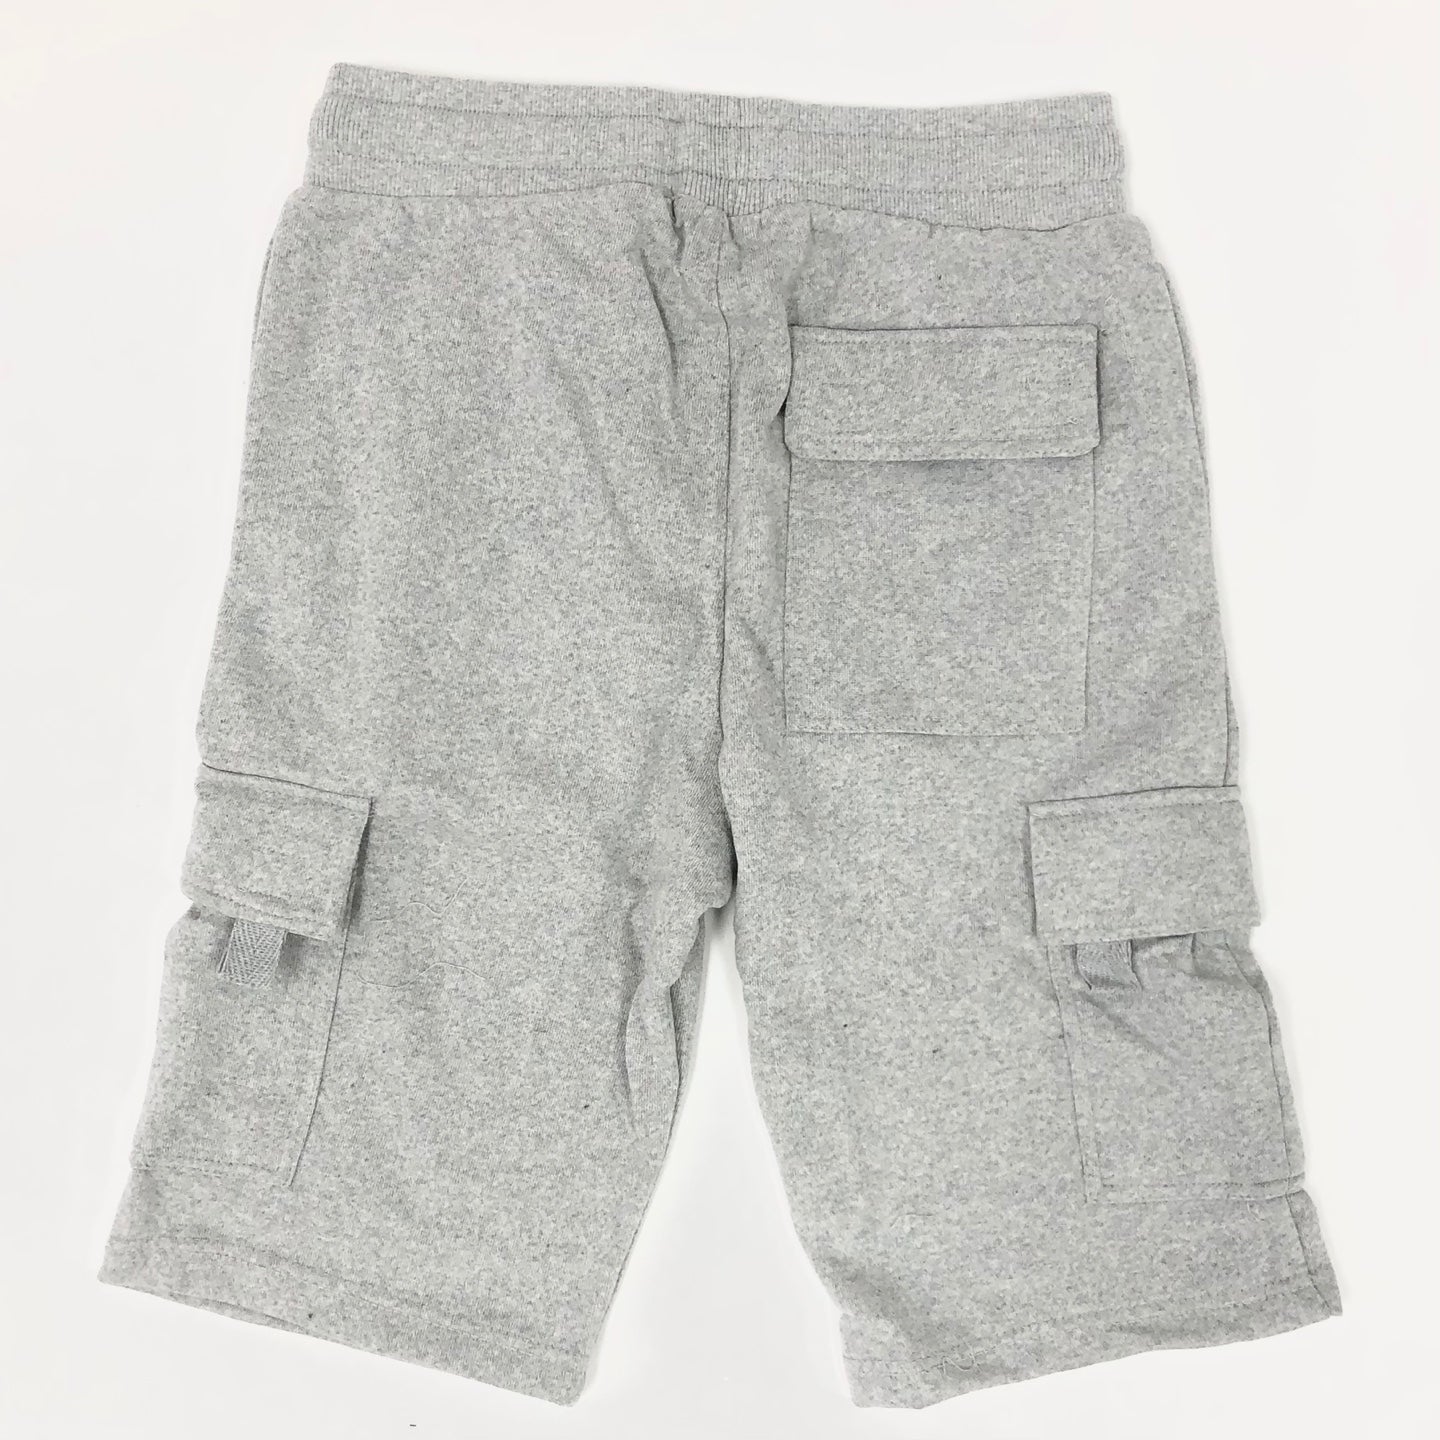 Fleece Shorts with Pockets